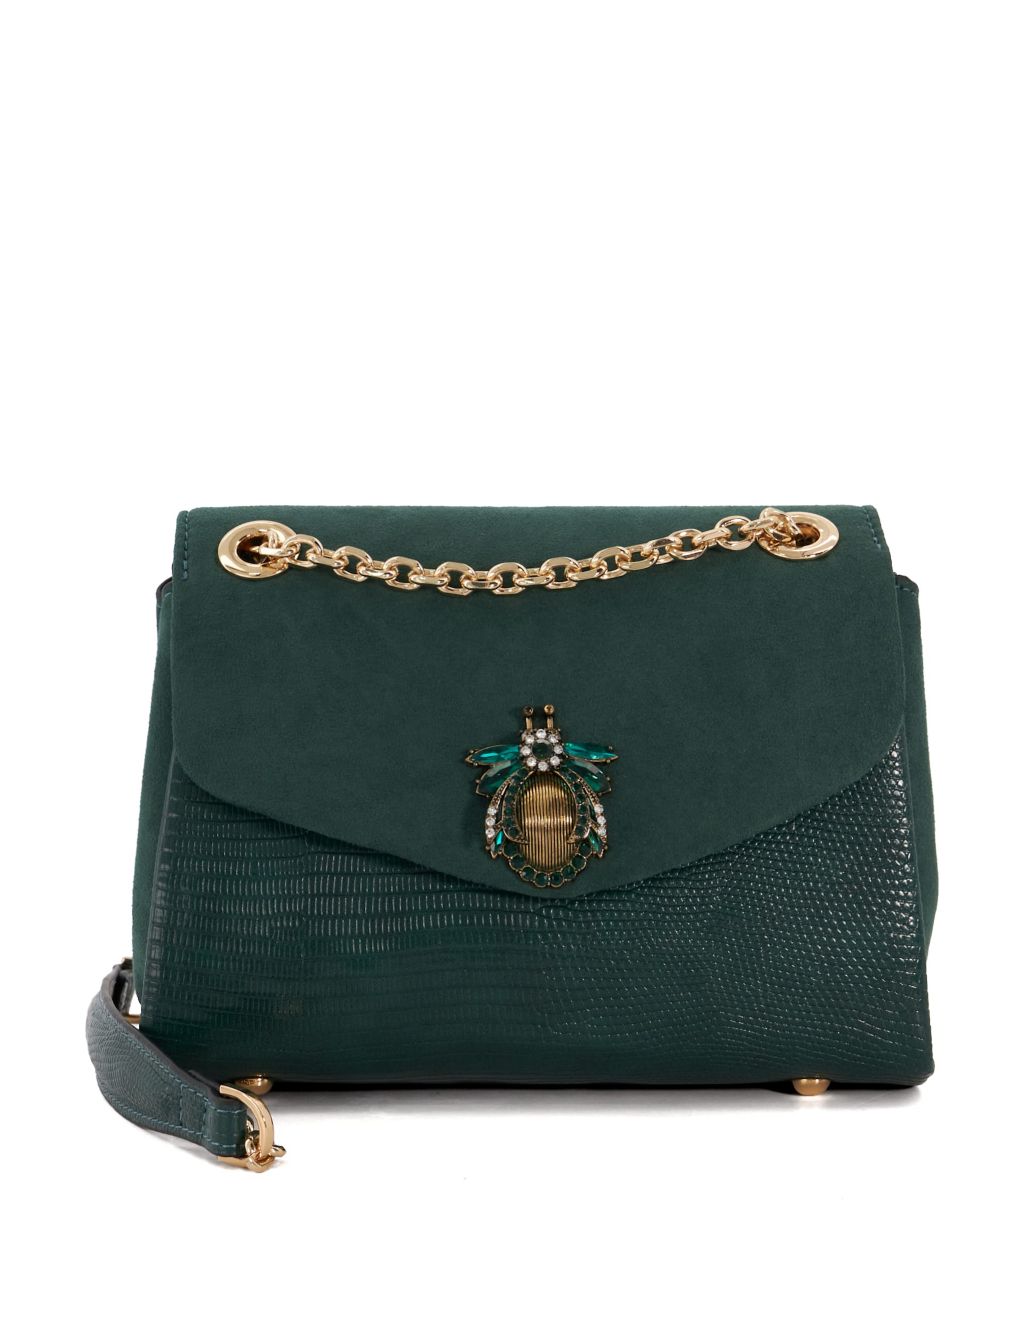 Green Handbags | M&S